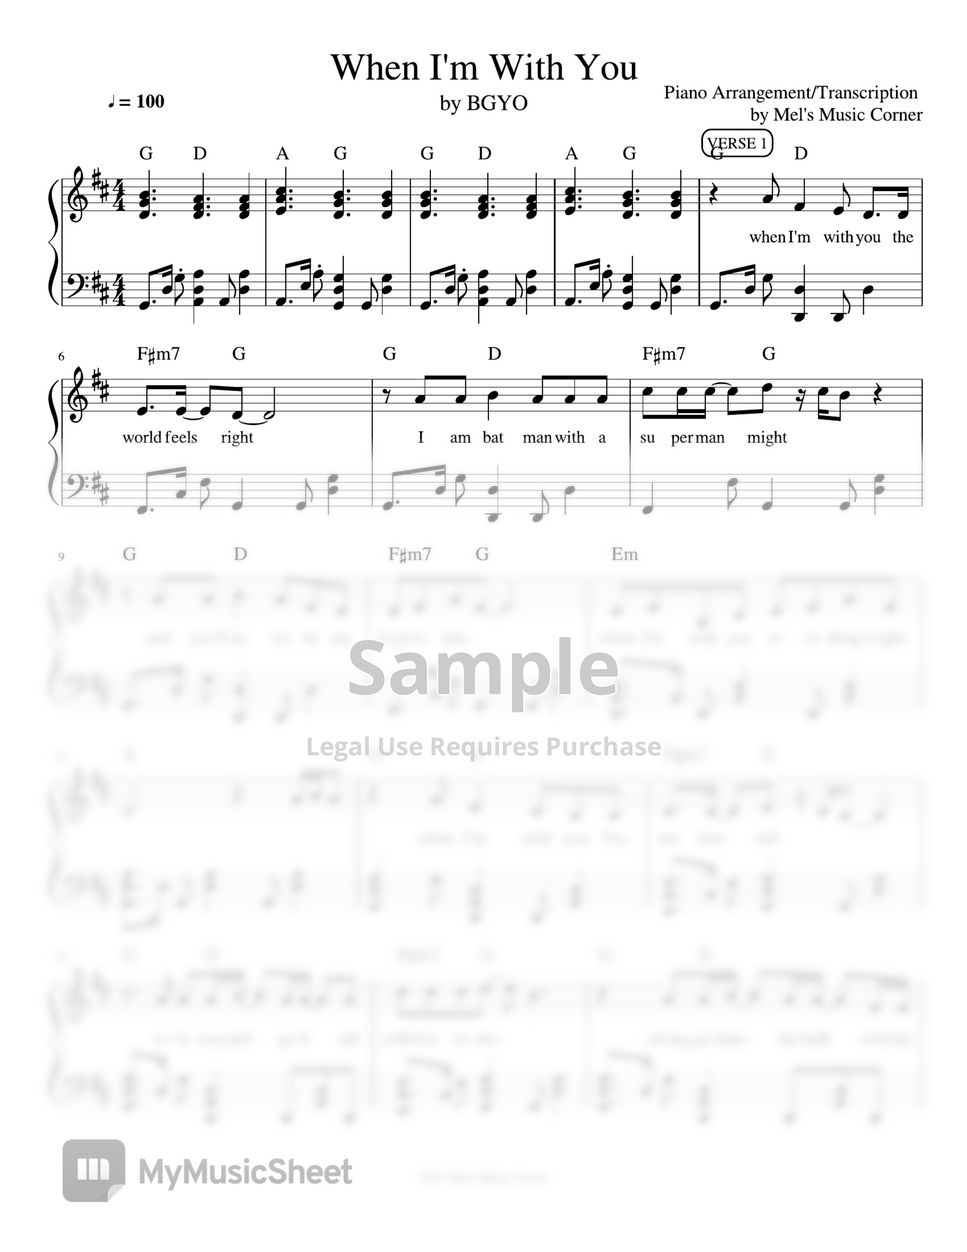 bgyo-when-i-m-with-you-piano-sheet-music-sheets-by-mel-s-music-corner